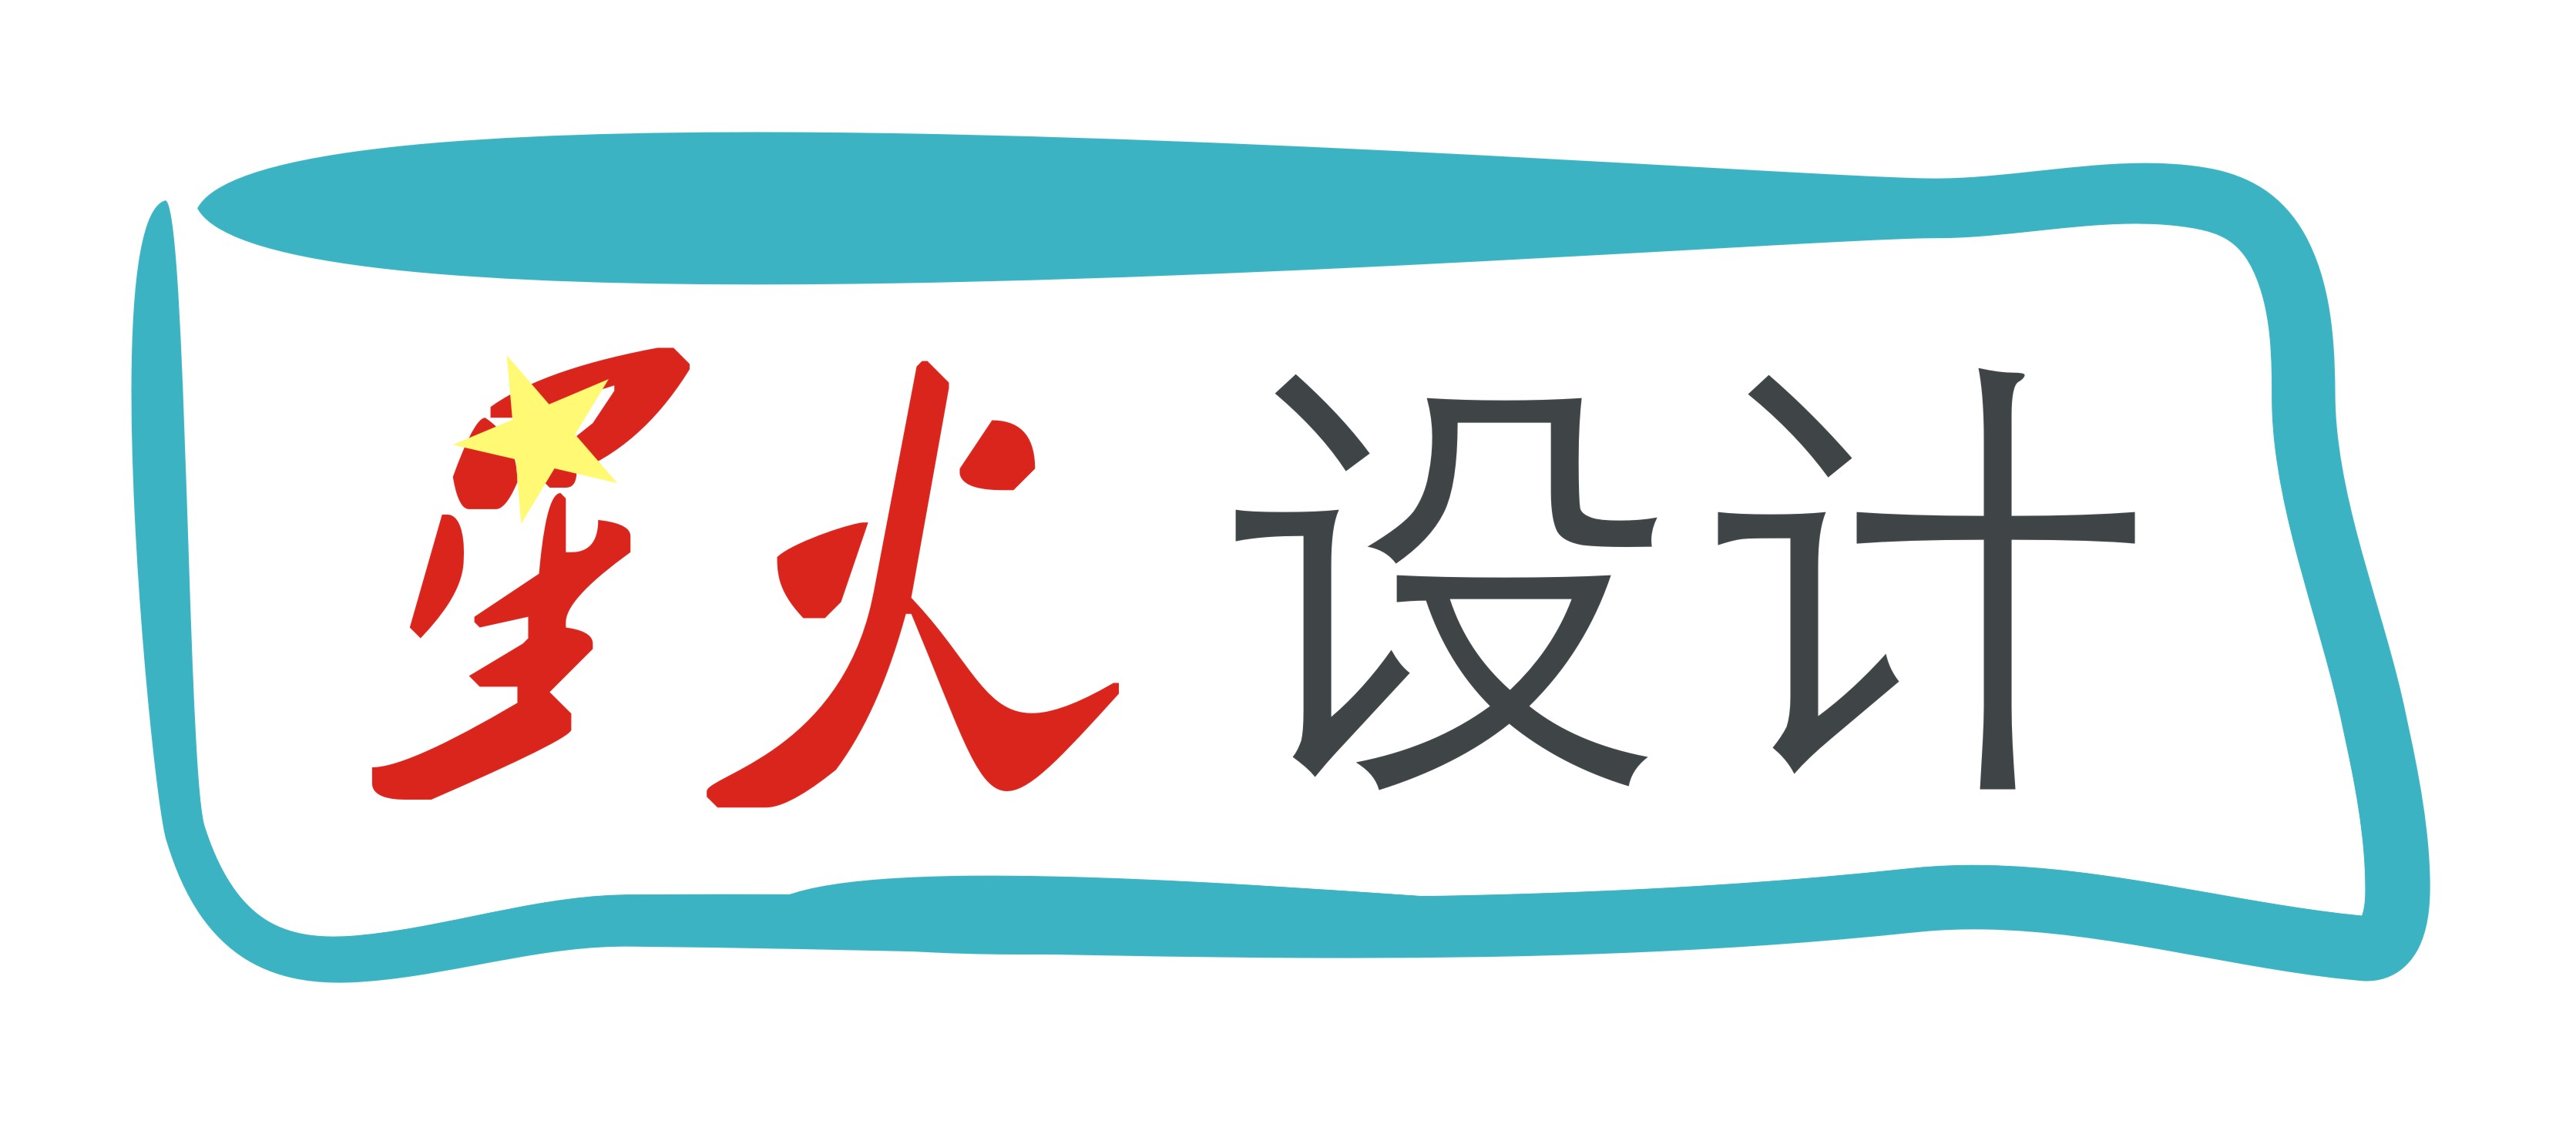 星火logo